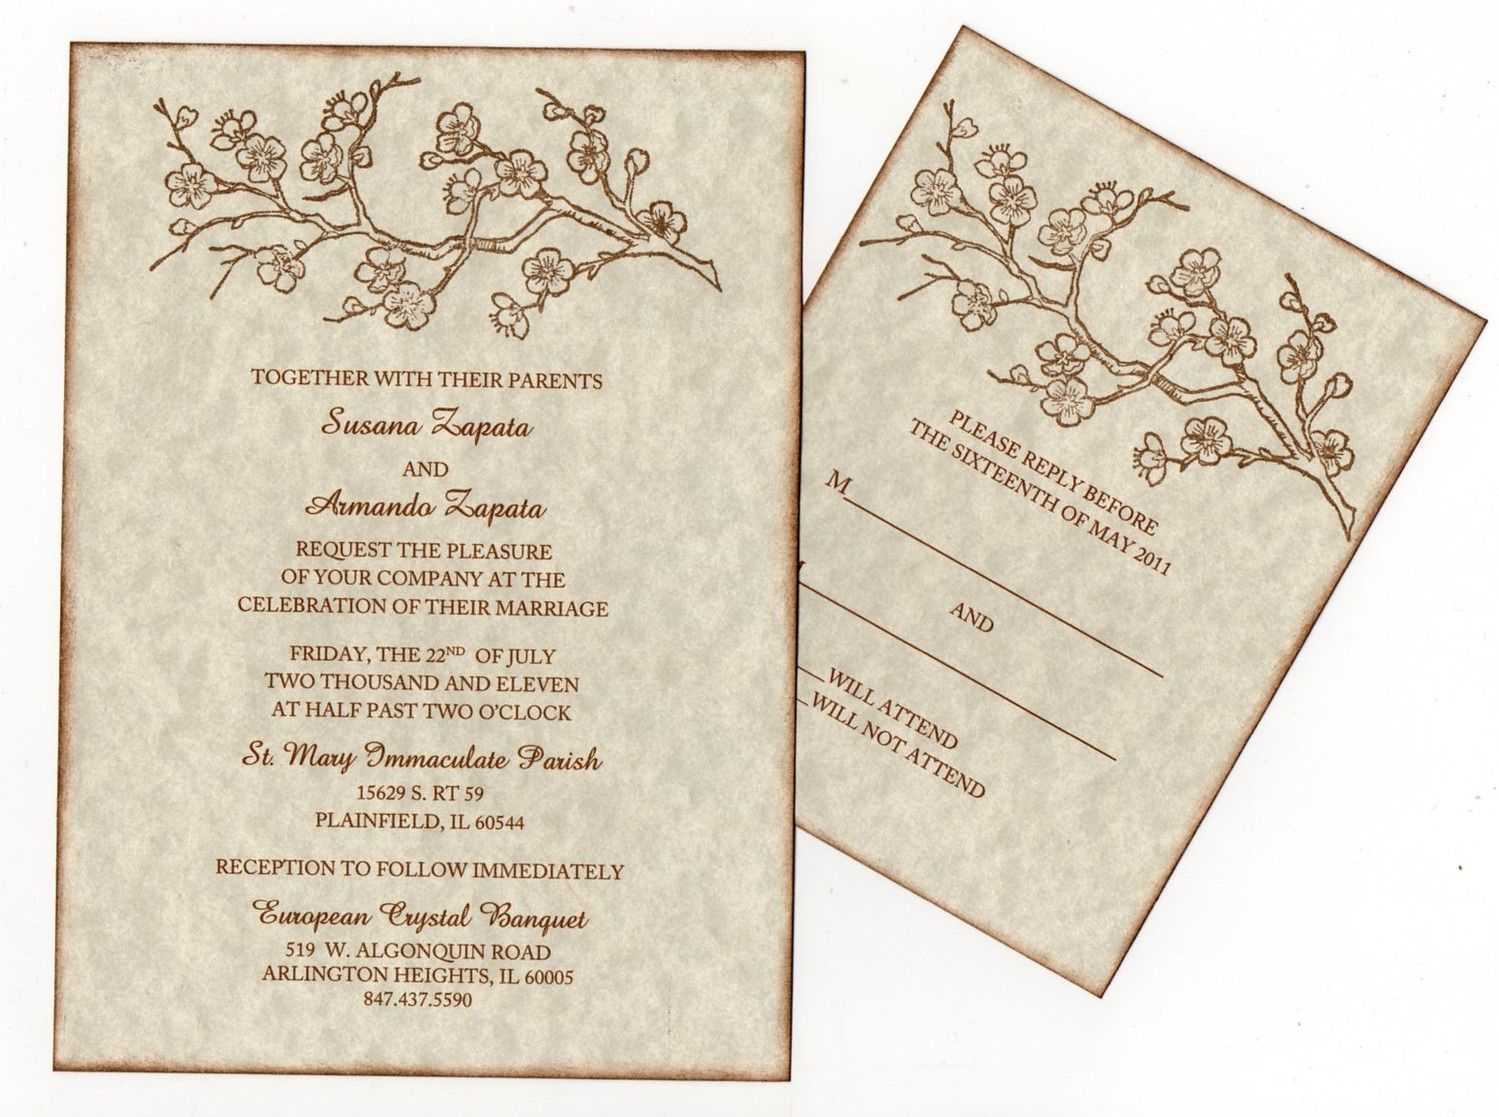 Wedding Invitation Wording: Indian Wedding Invitation With Sample Wedding Invitation Cards Templates